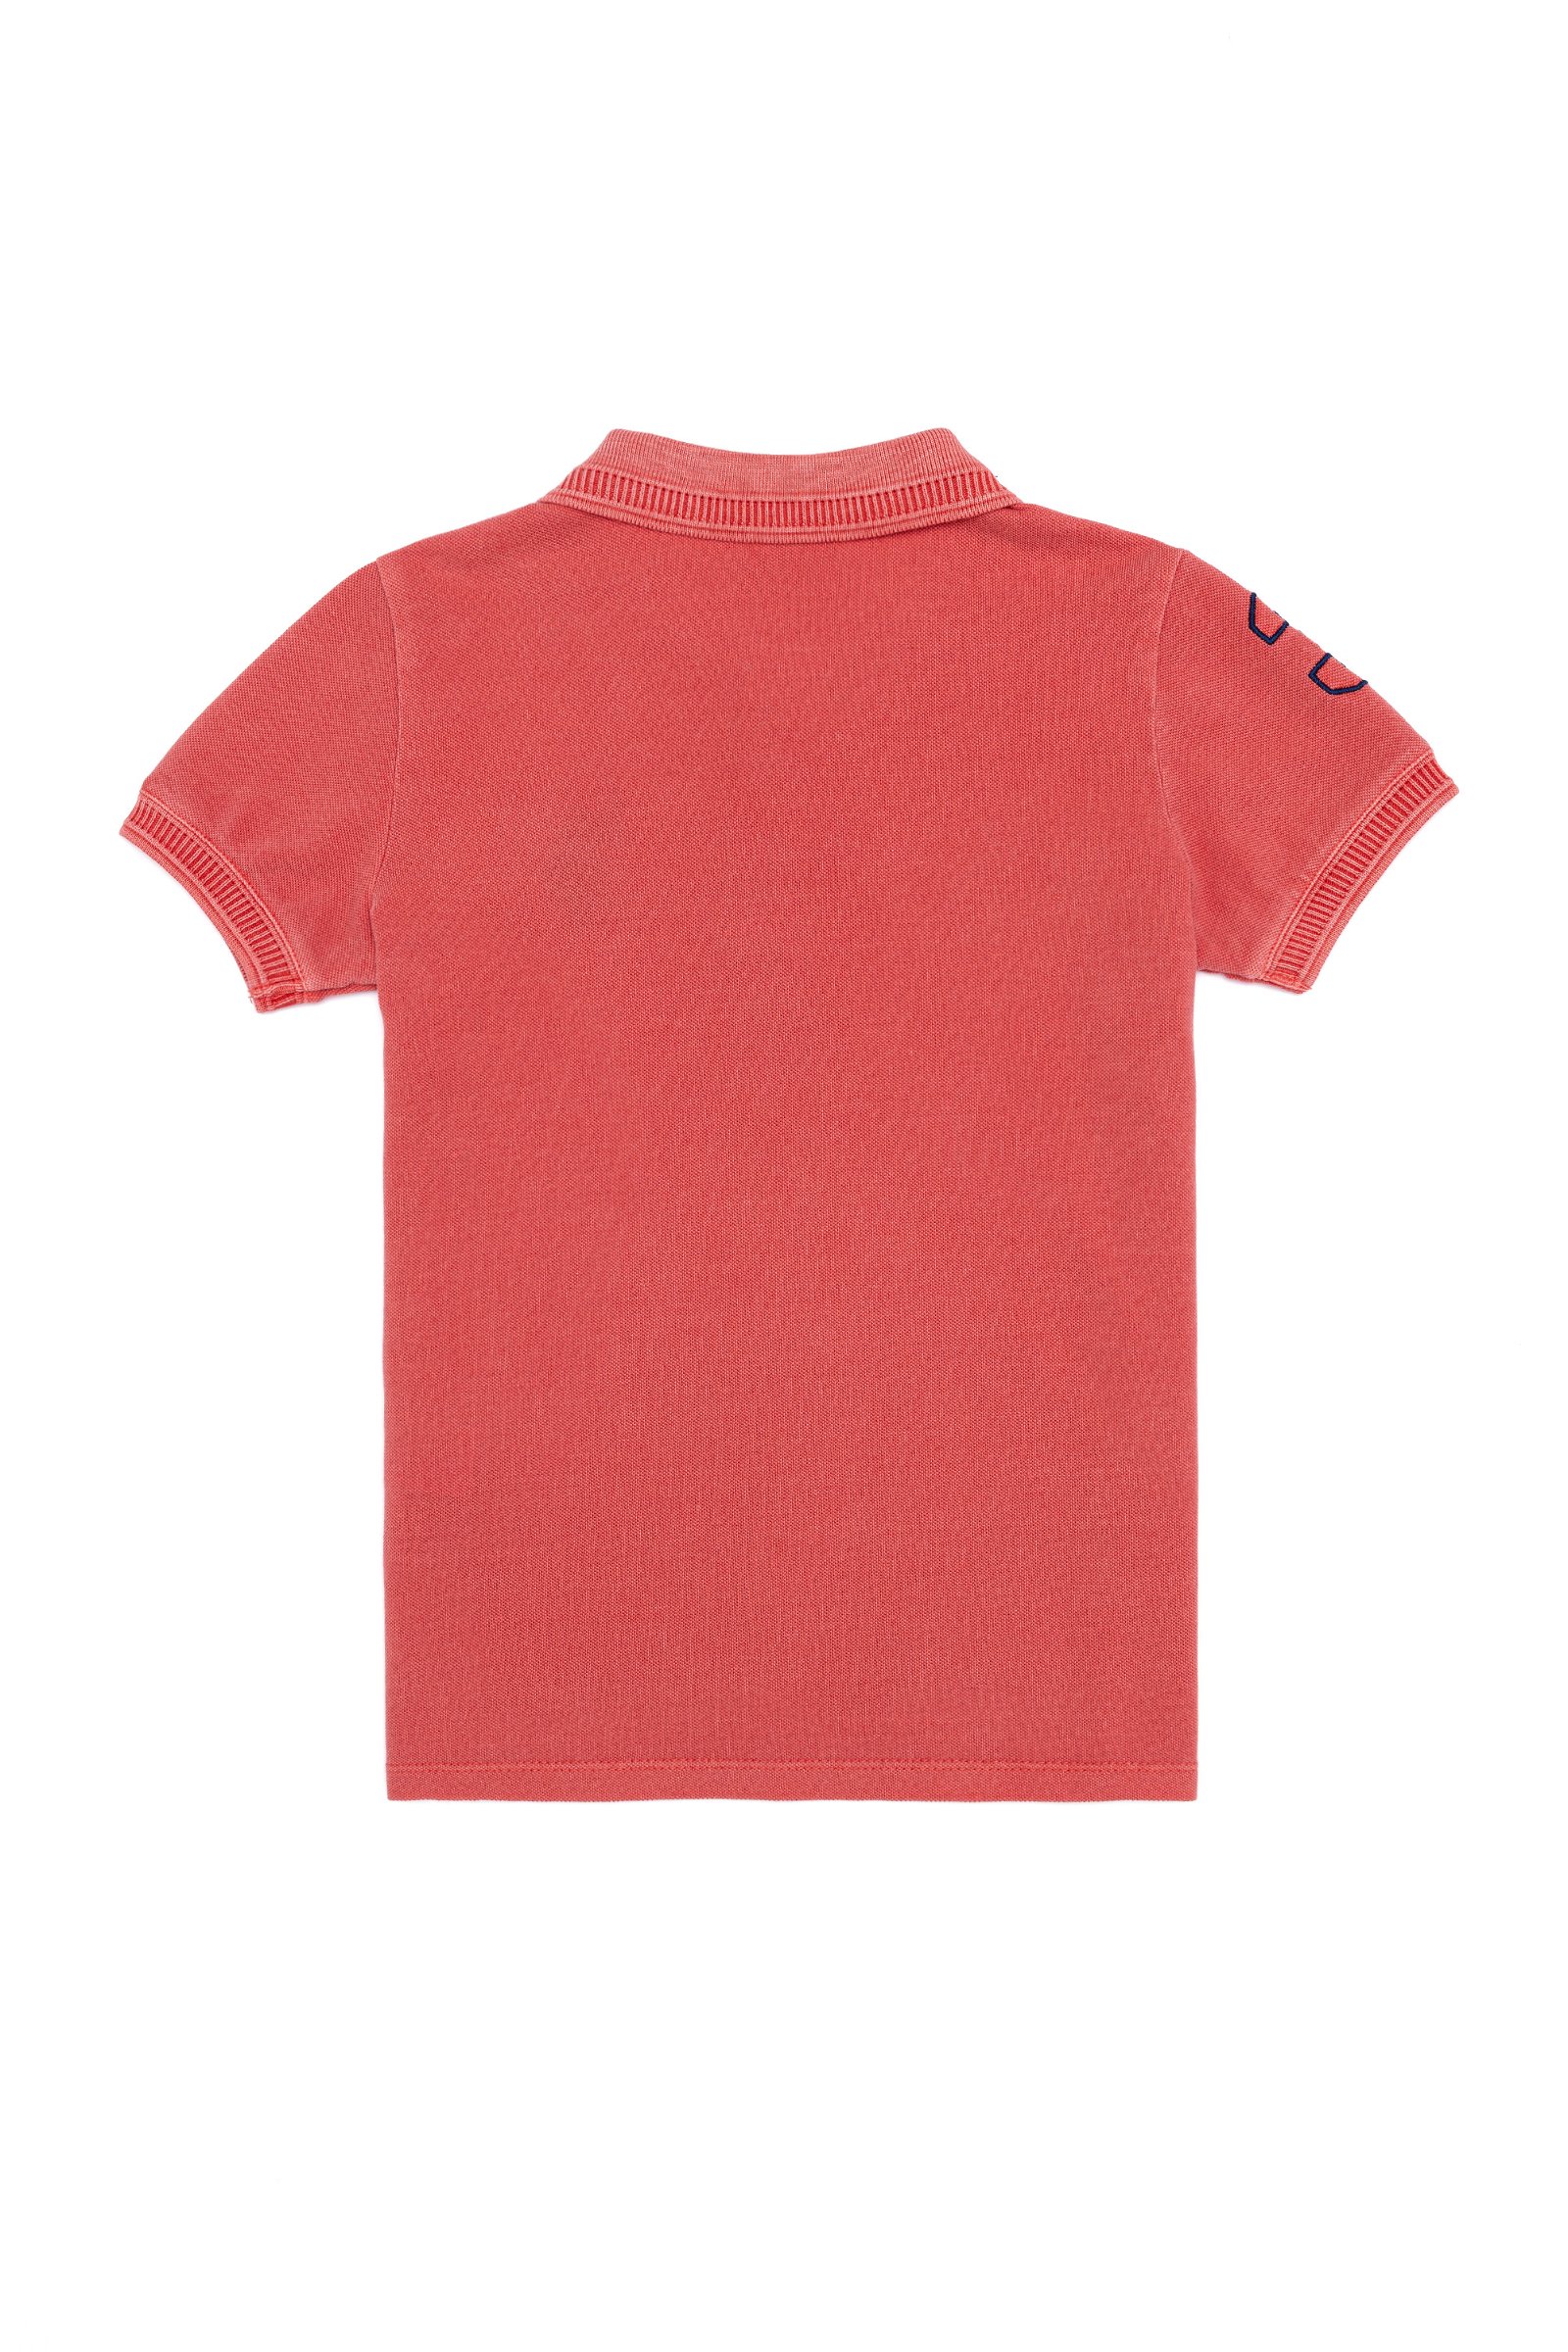 تی شرت یقه پولو قرمز  استاندارد فیت آستین کوتاه پسرانه یو اس پولو | US POLO ASSN